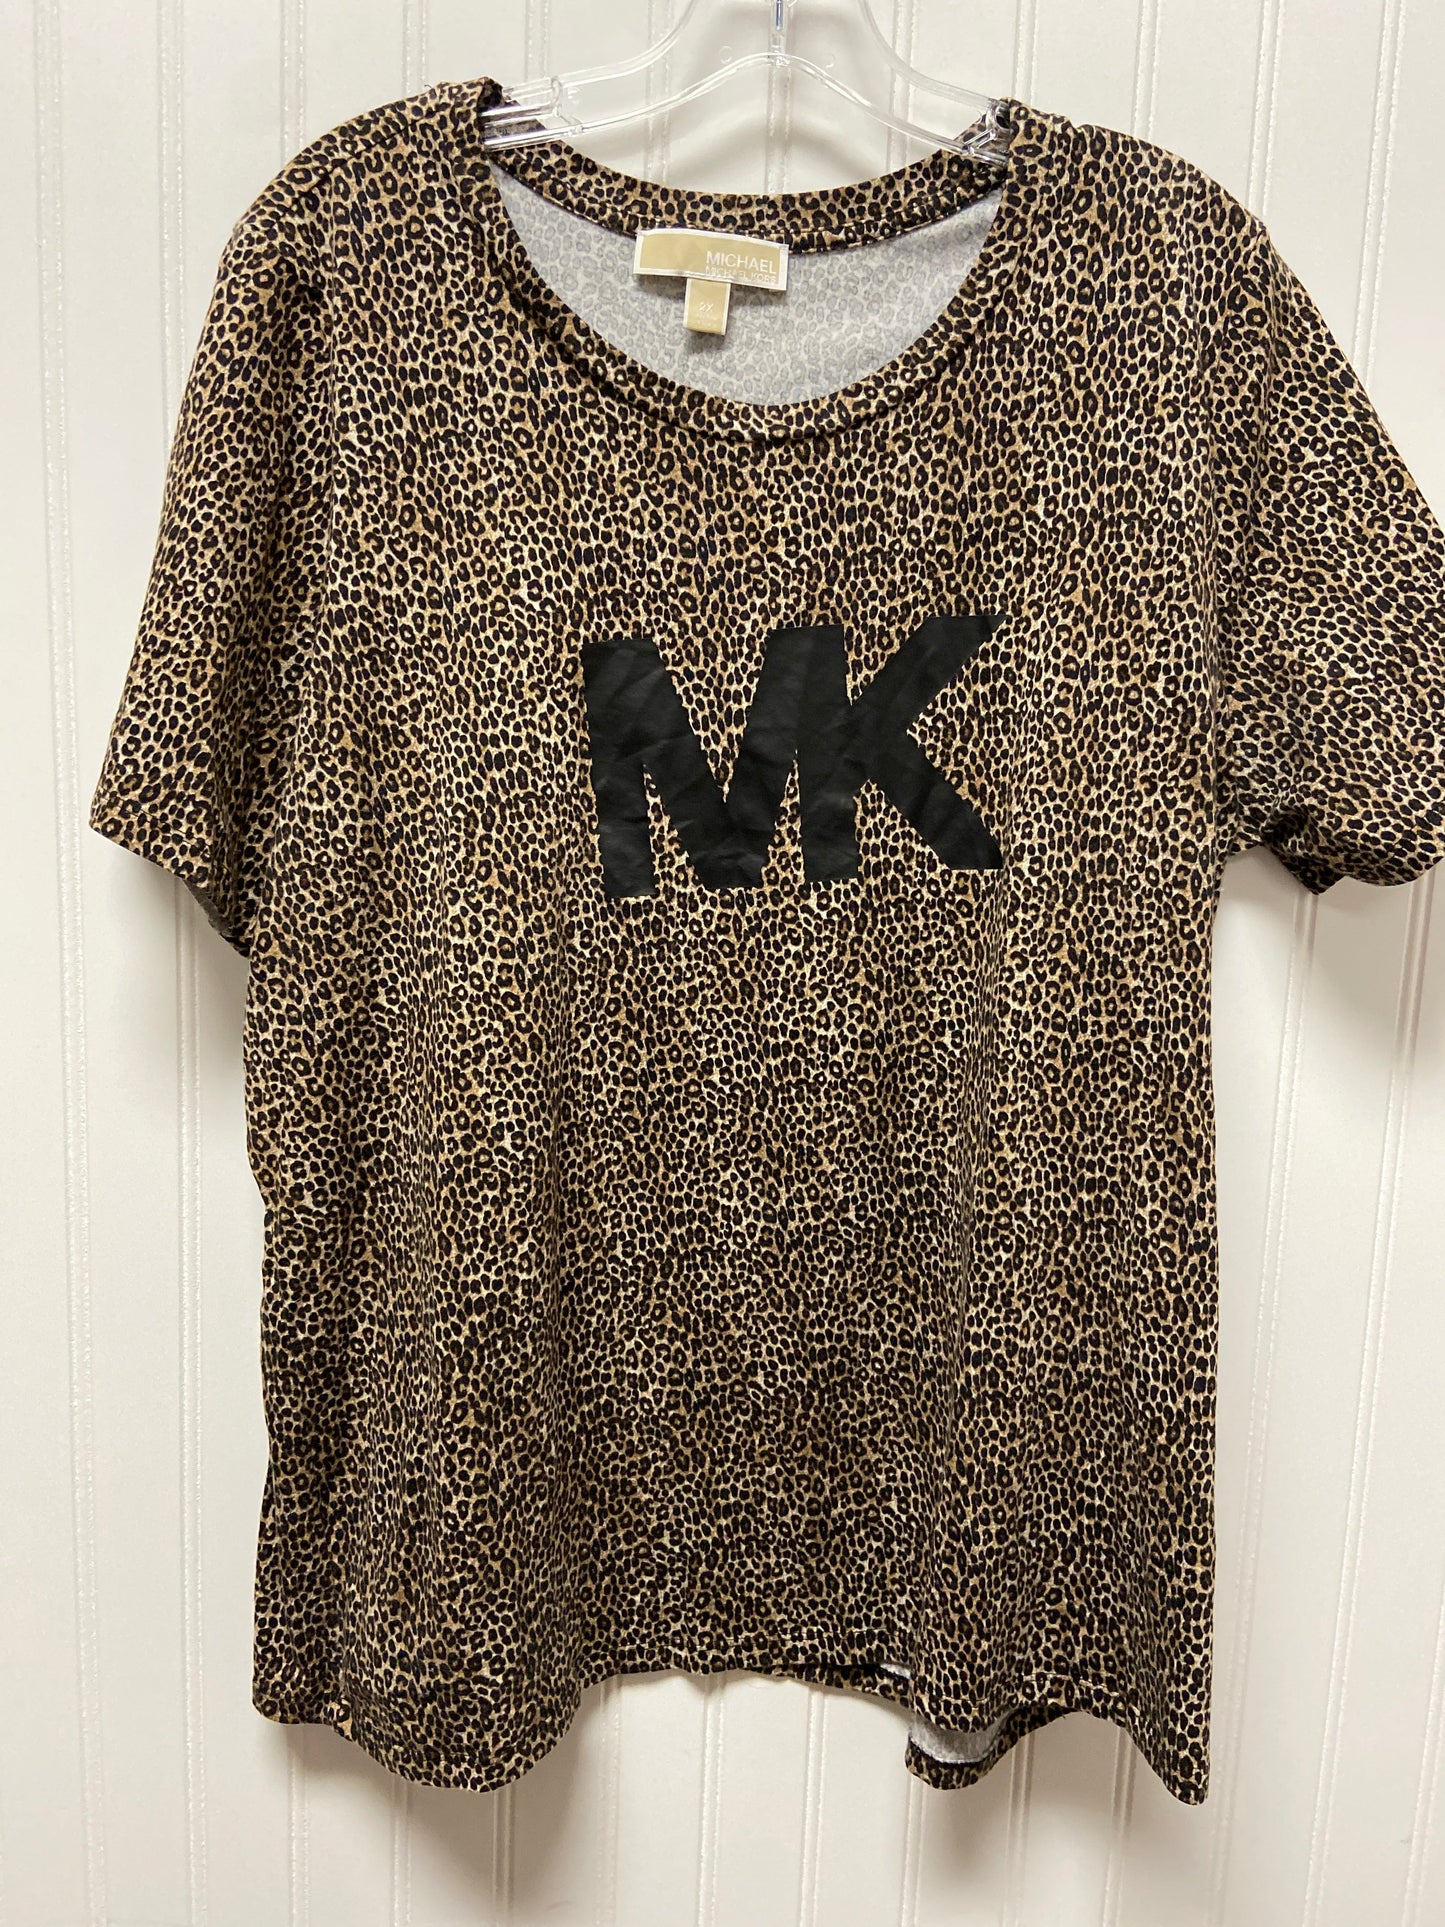 Animal Print Top Short Sleeve Michael By Michael Kors, Size 2x